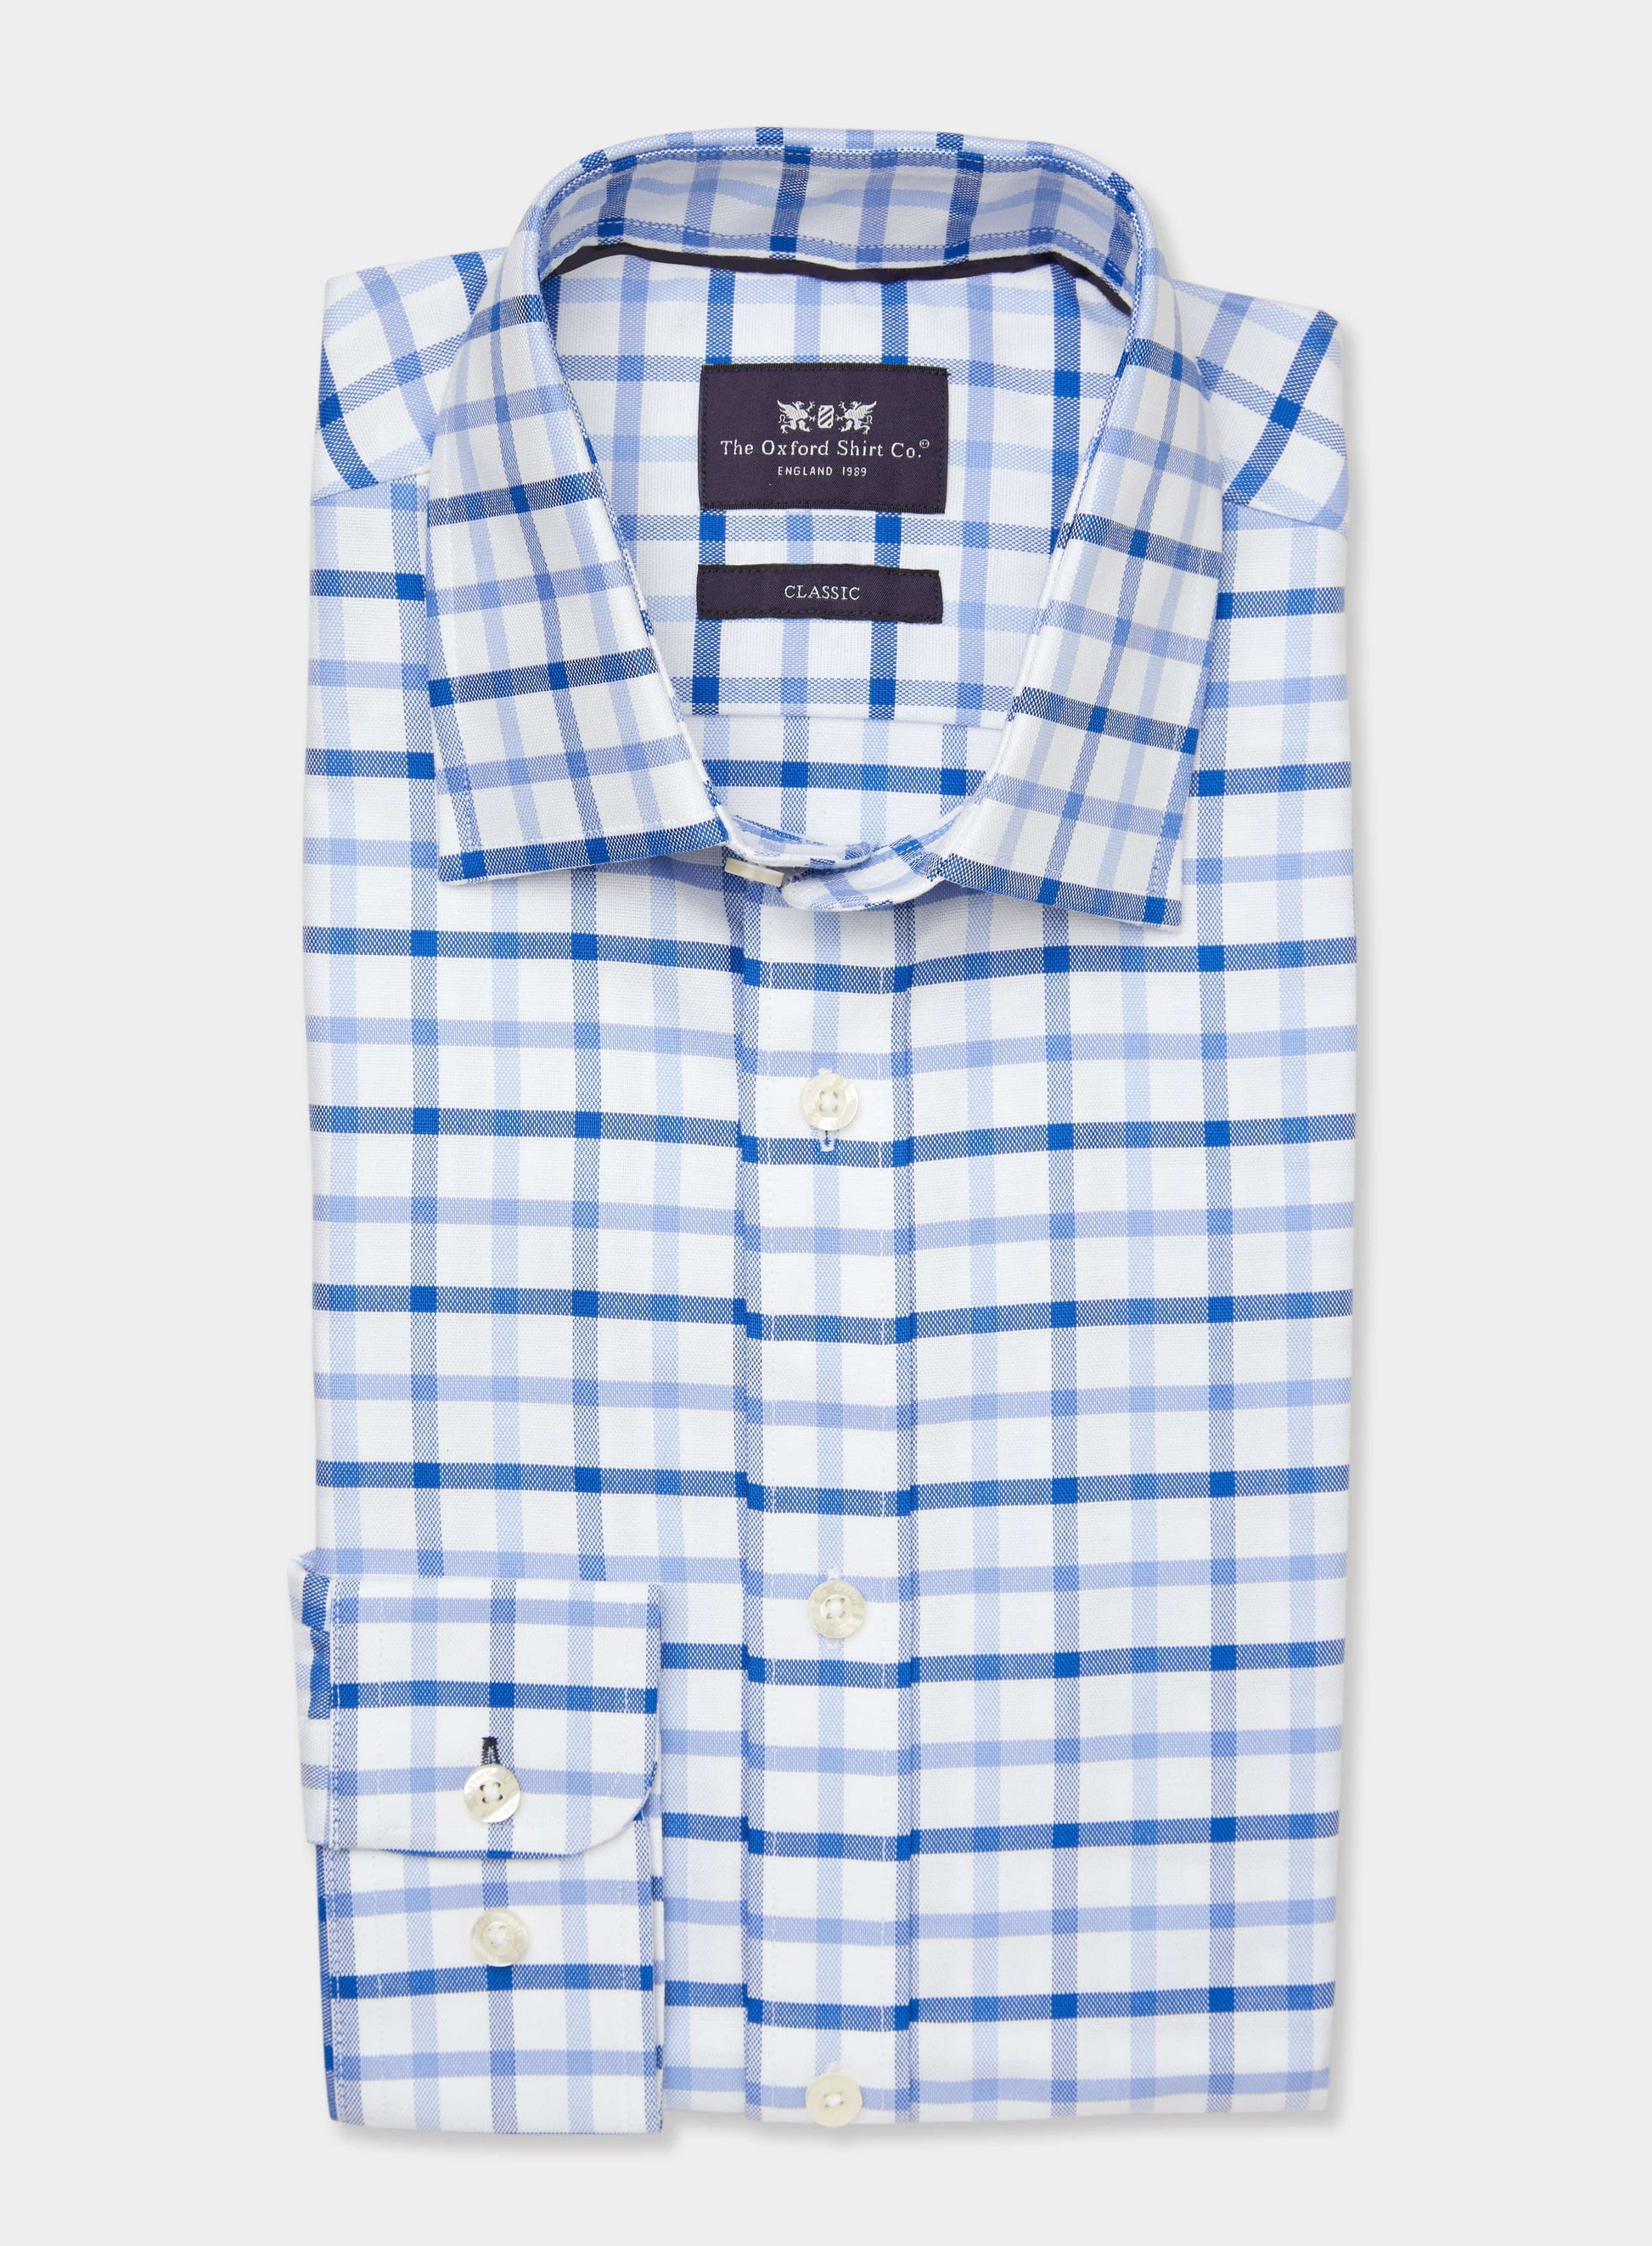 Classic Shirt in Multi Blue Check